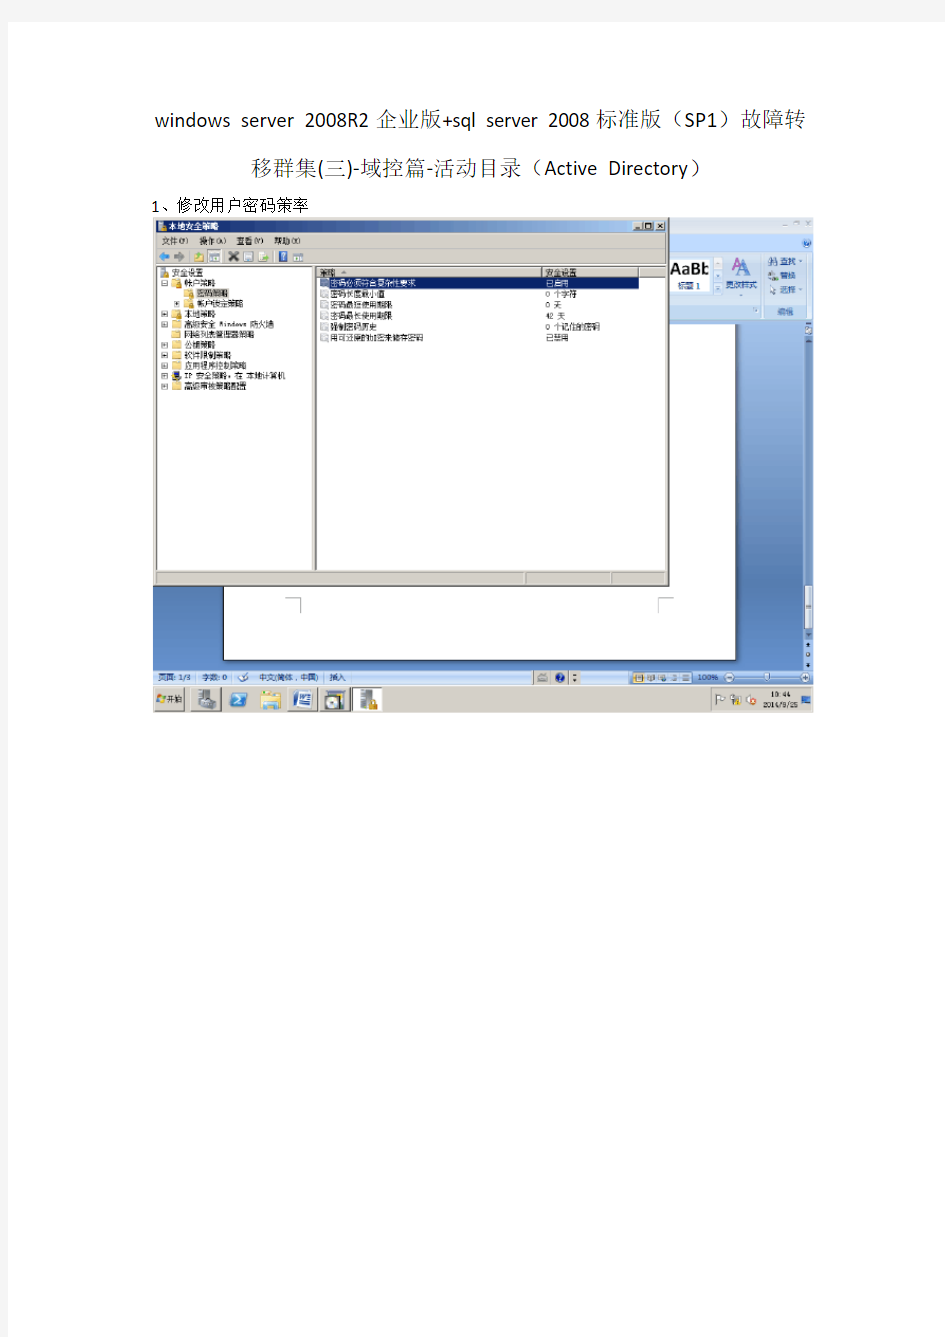 windows server 2008R2企业版+sql server 2008标准版(SP1)故障转移群集(三)-域控篇